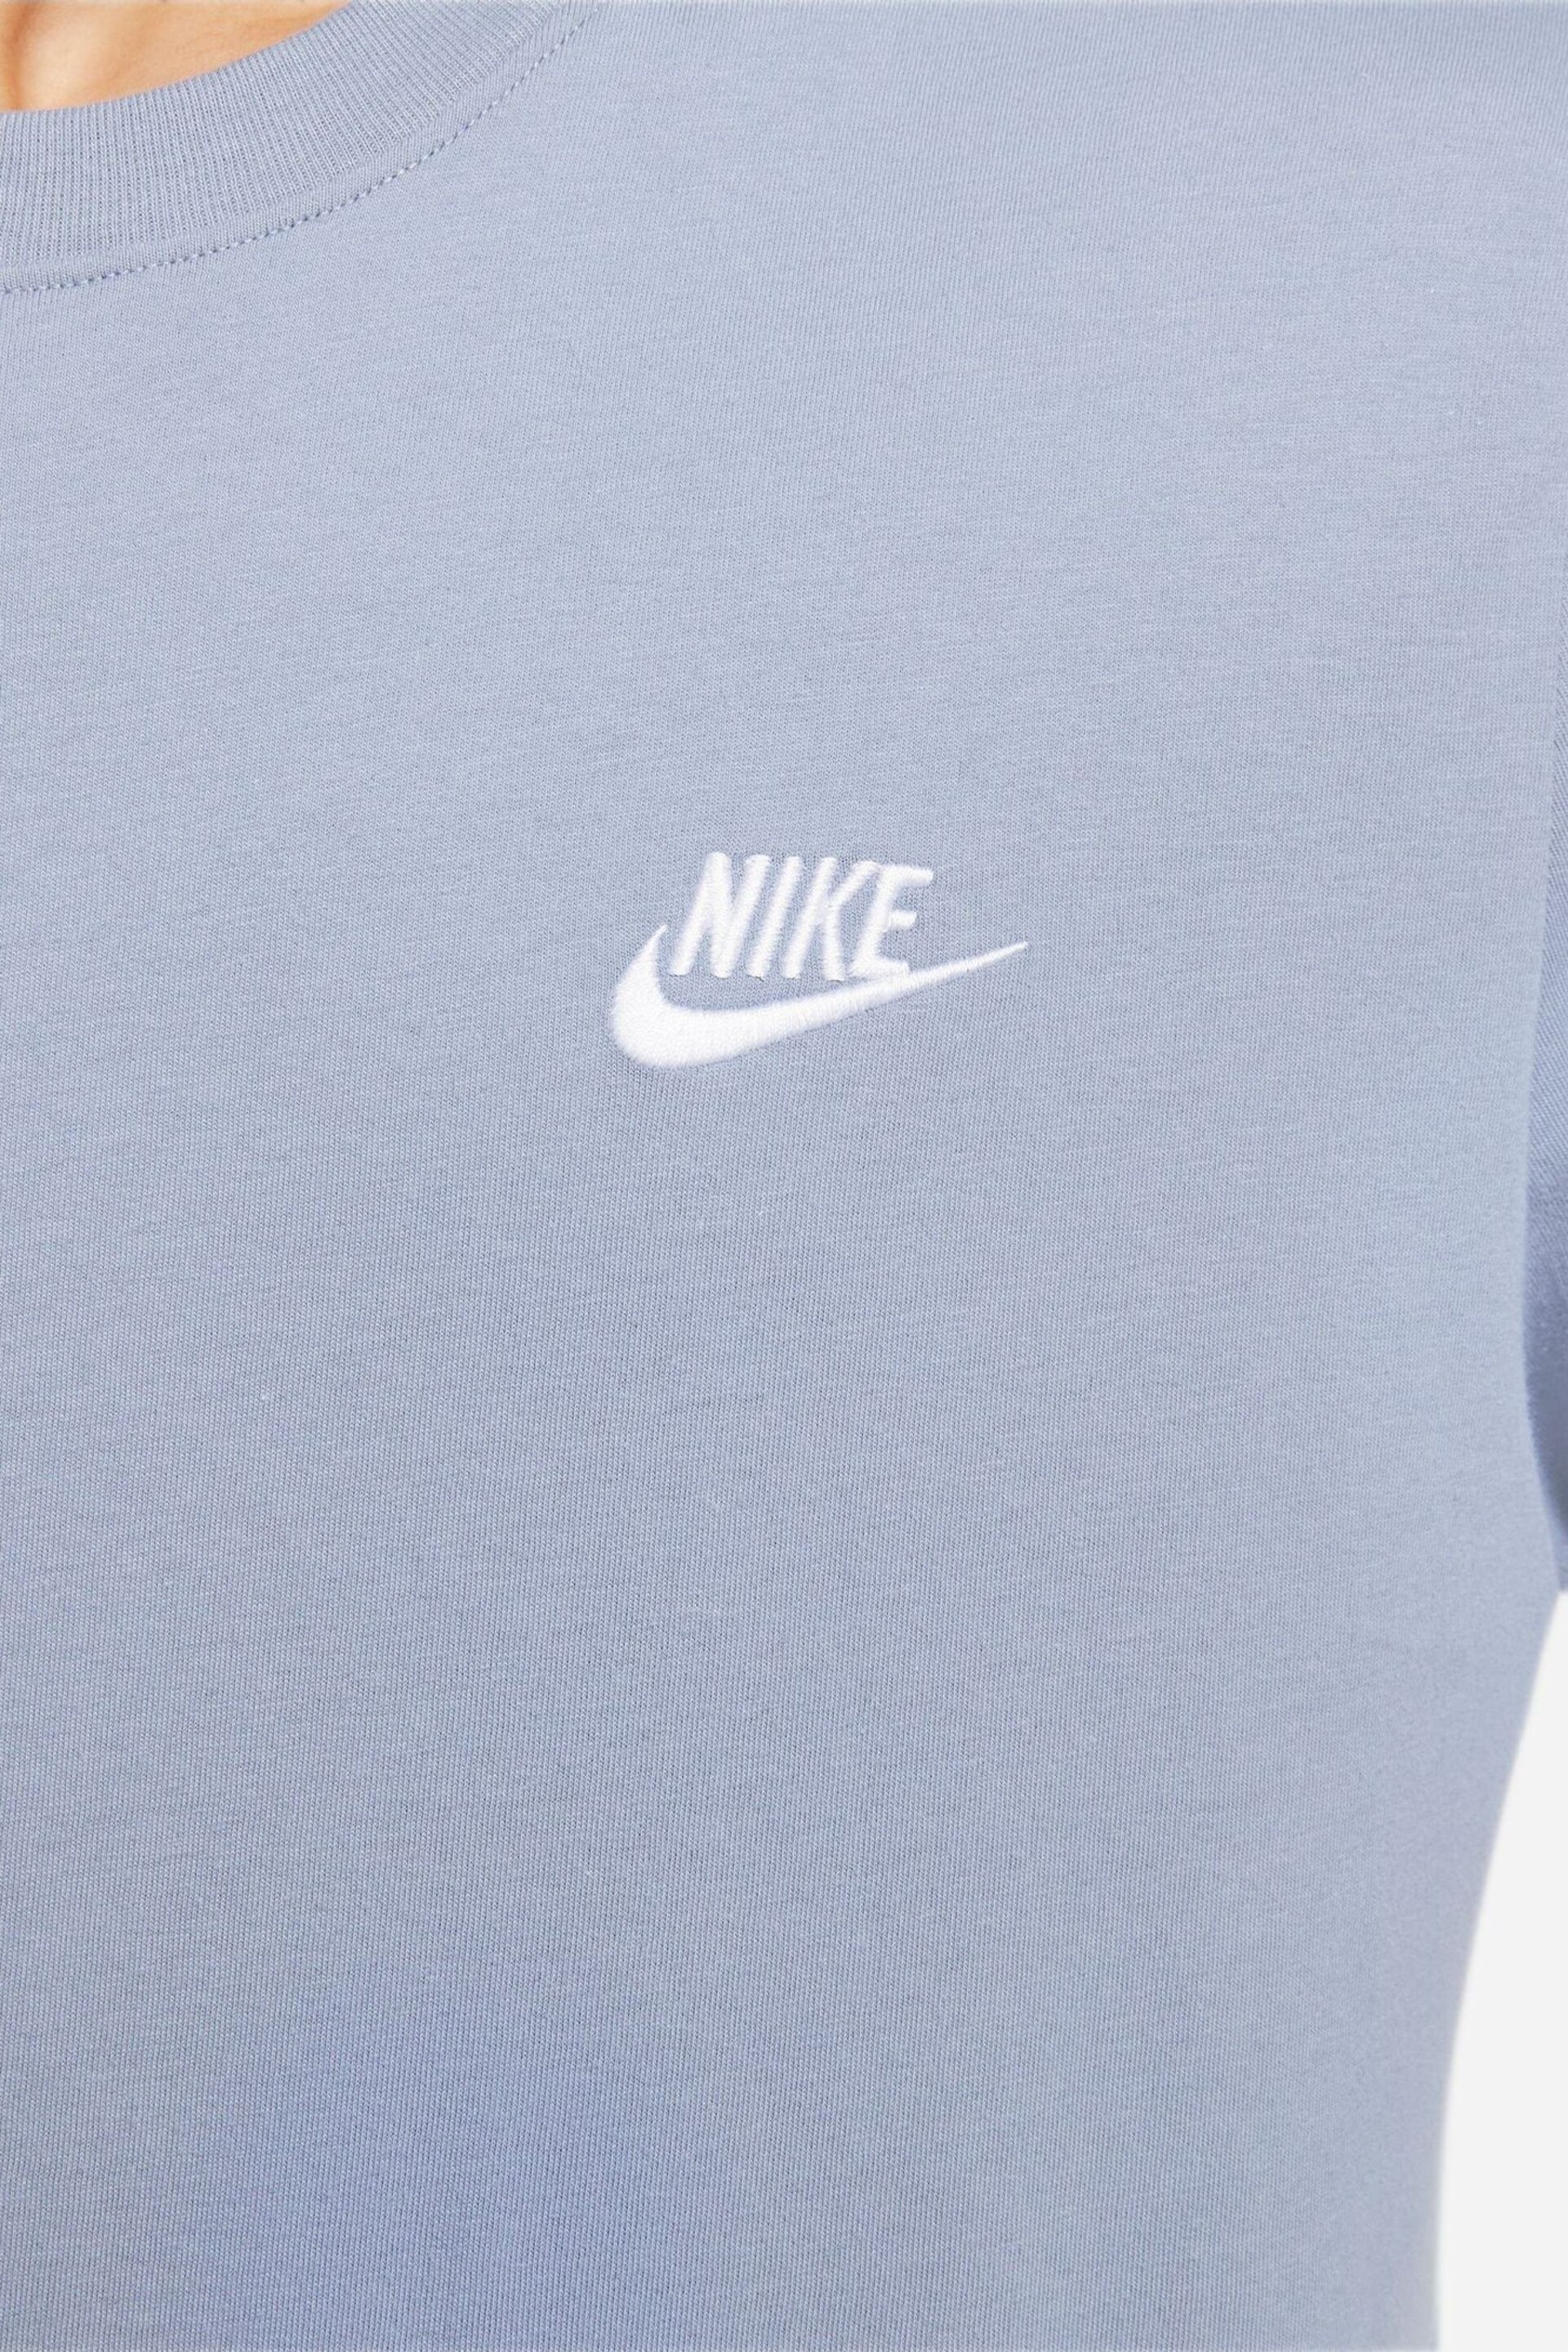 Nike Slate Grey Club T-Shirt - Image 9 of 9